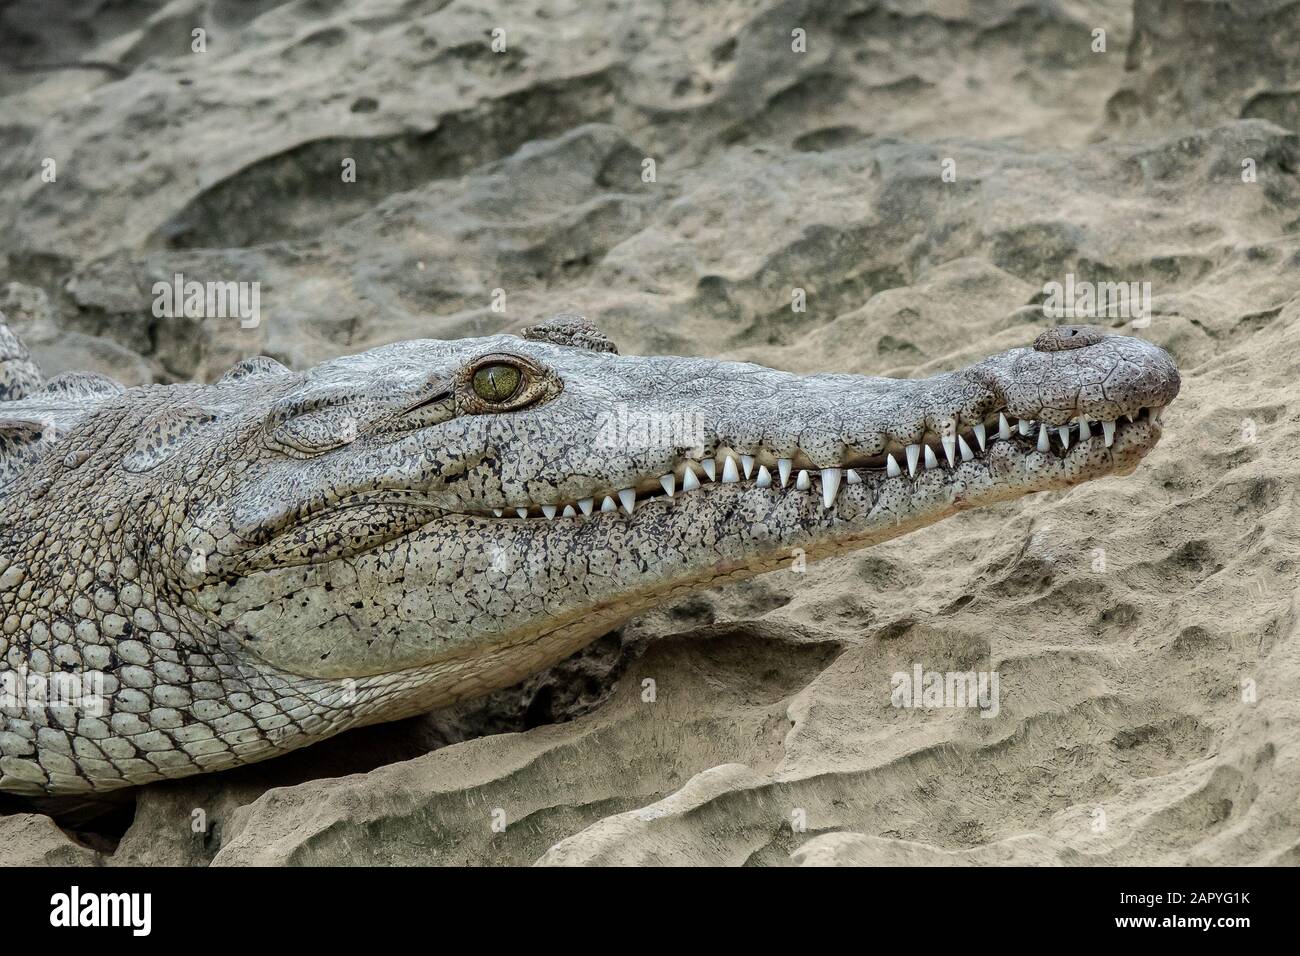 Close angle shot of a part of a crocodile's head put on sand Stock Photo